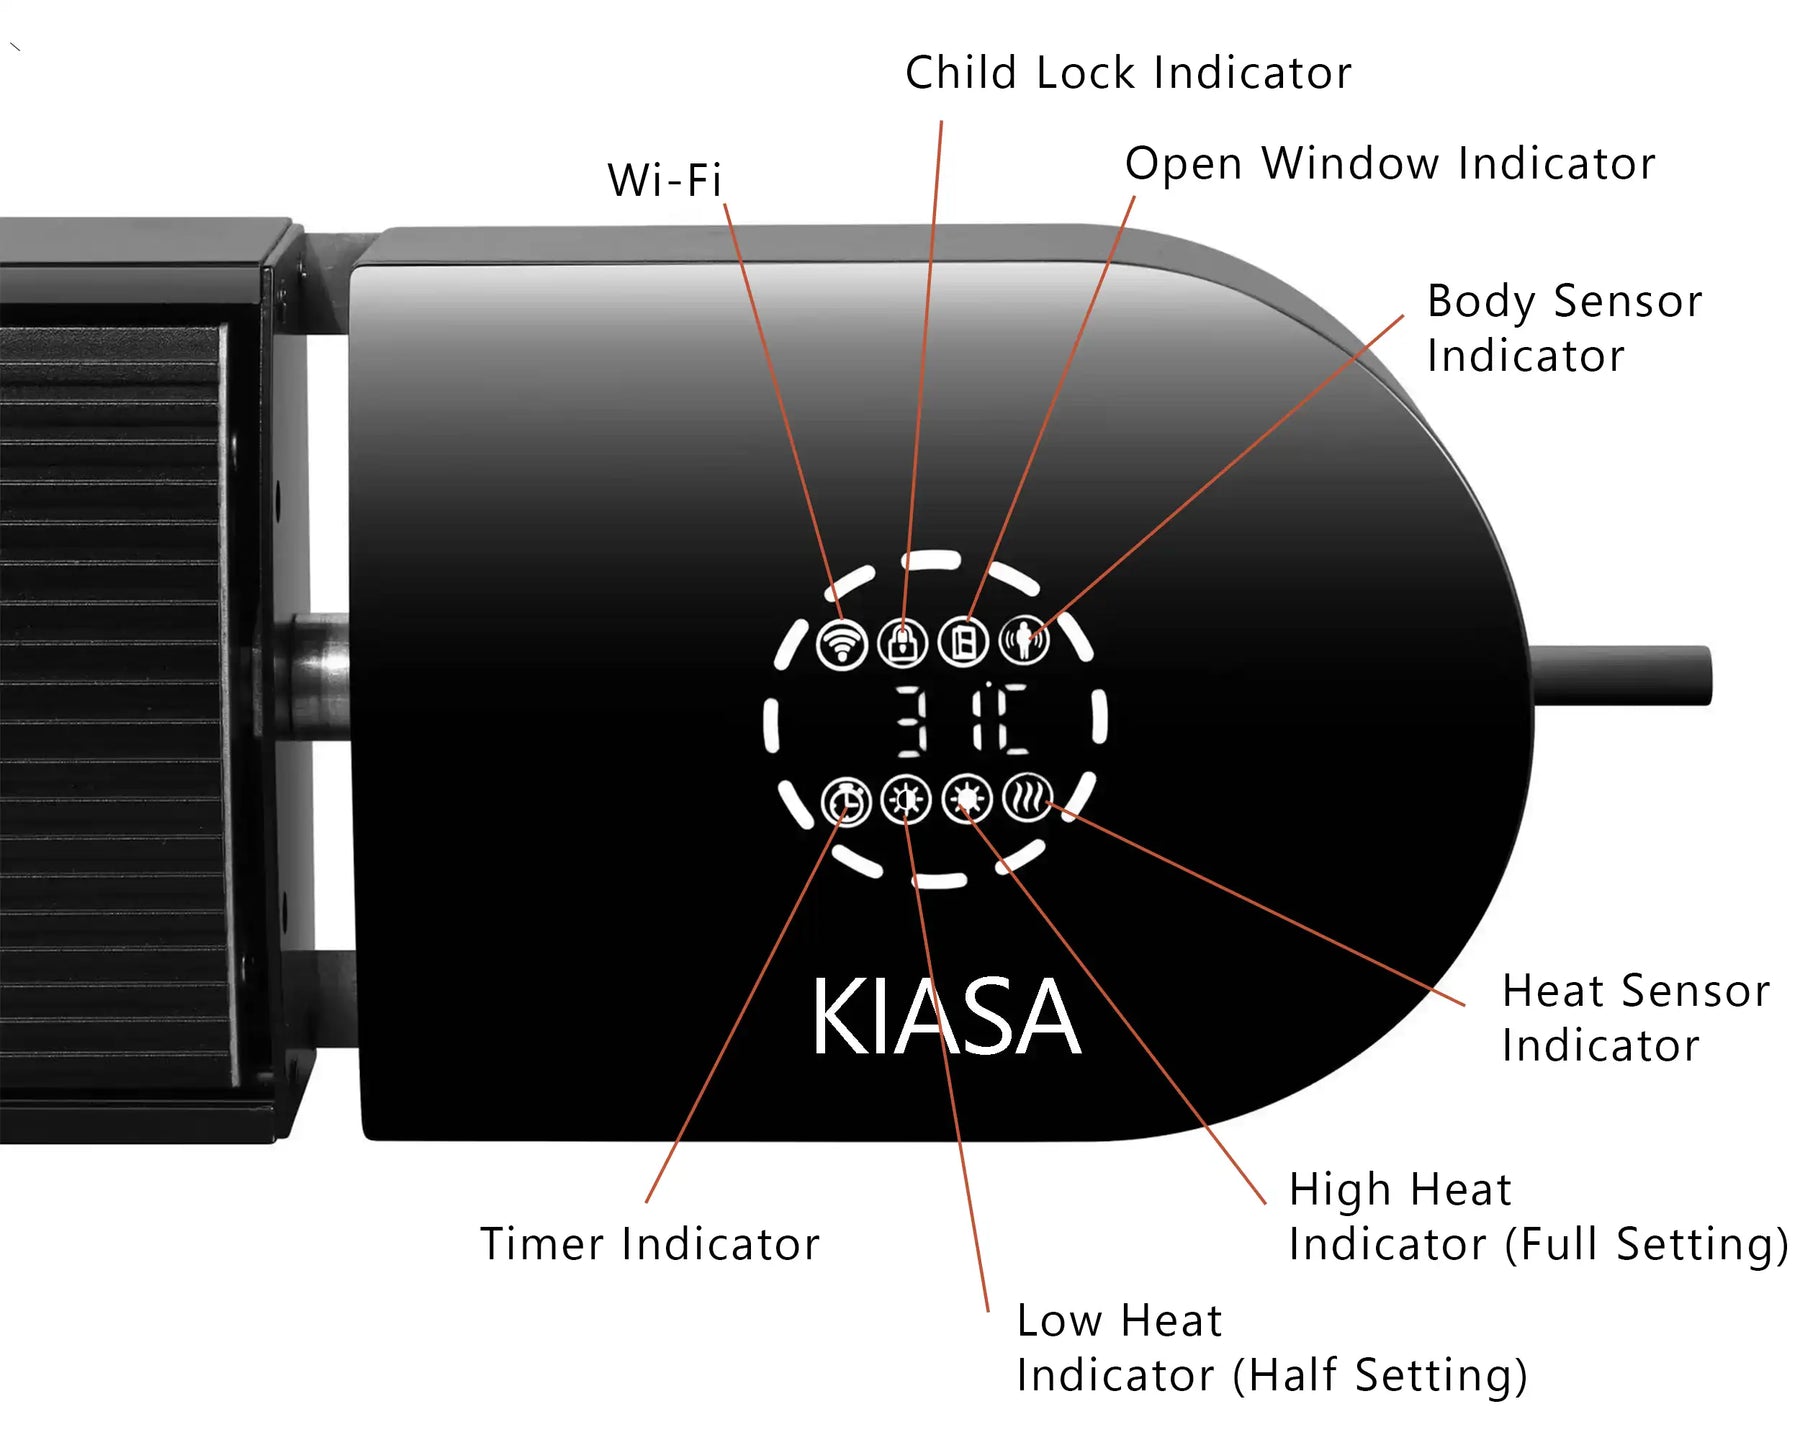 KIASA 1200W Smart Wi-Fi Infrared Heater Bar display screen - Multiple feature Wi-Fi Capability - Child Lock Indicator - Open Window Indicator - Body Sensor Indicator - Heat sensor Indicator - High Heat Indicator (Full Setting) - Low Heat Indicator (Half Setting) Timer Indicator